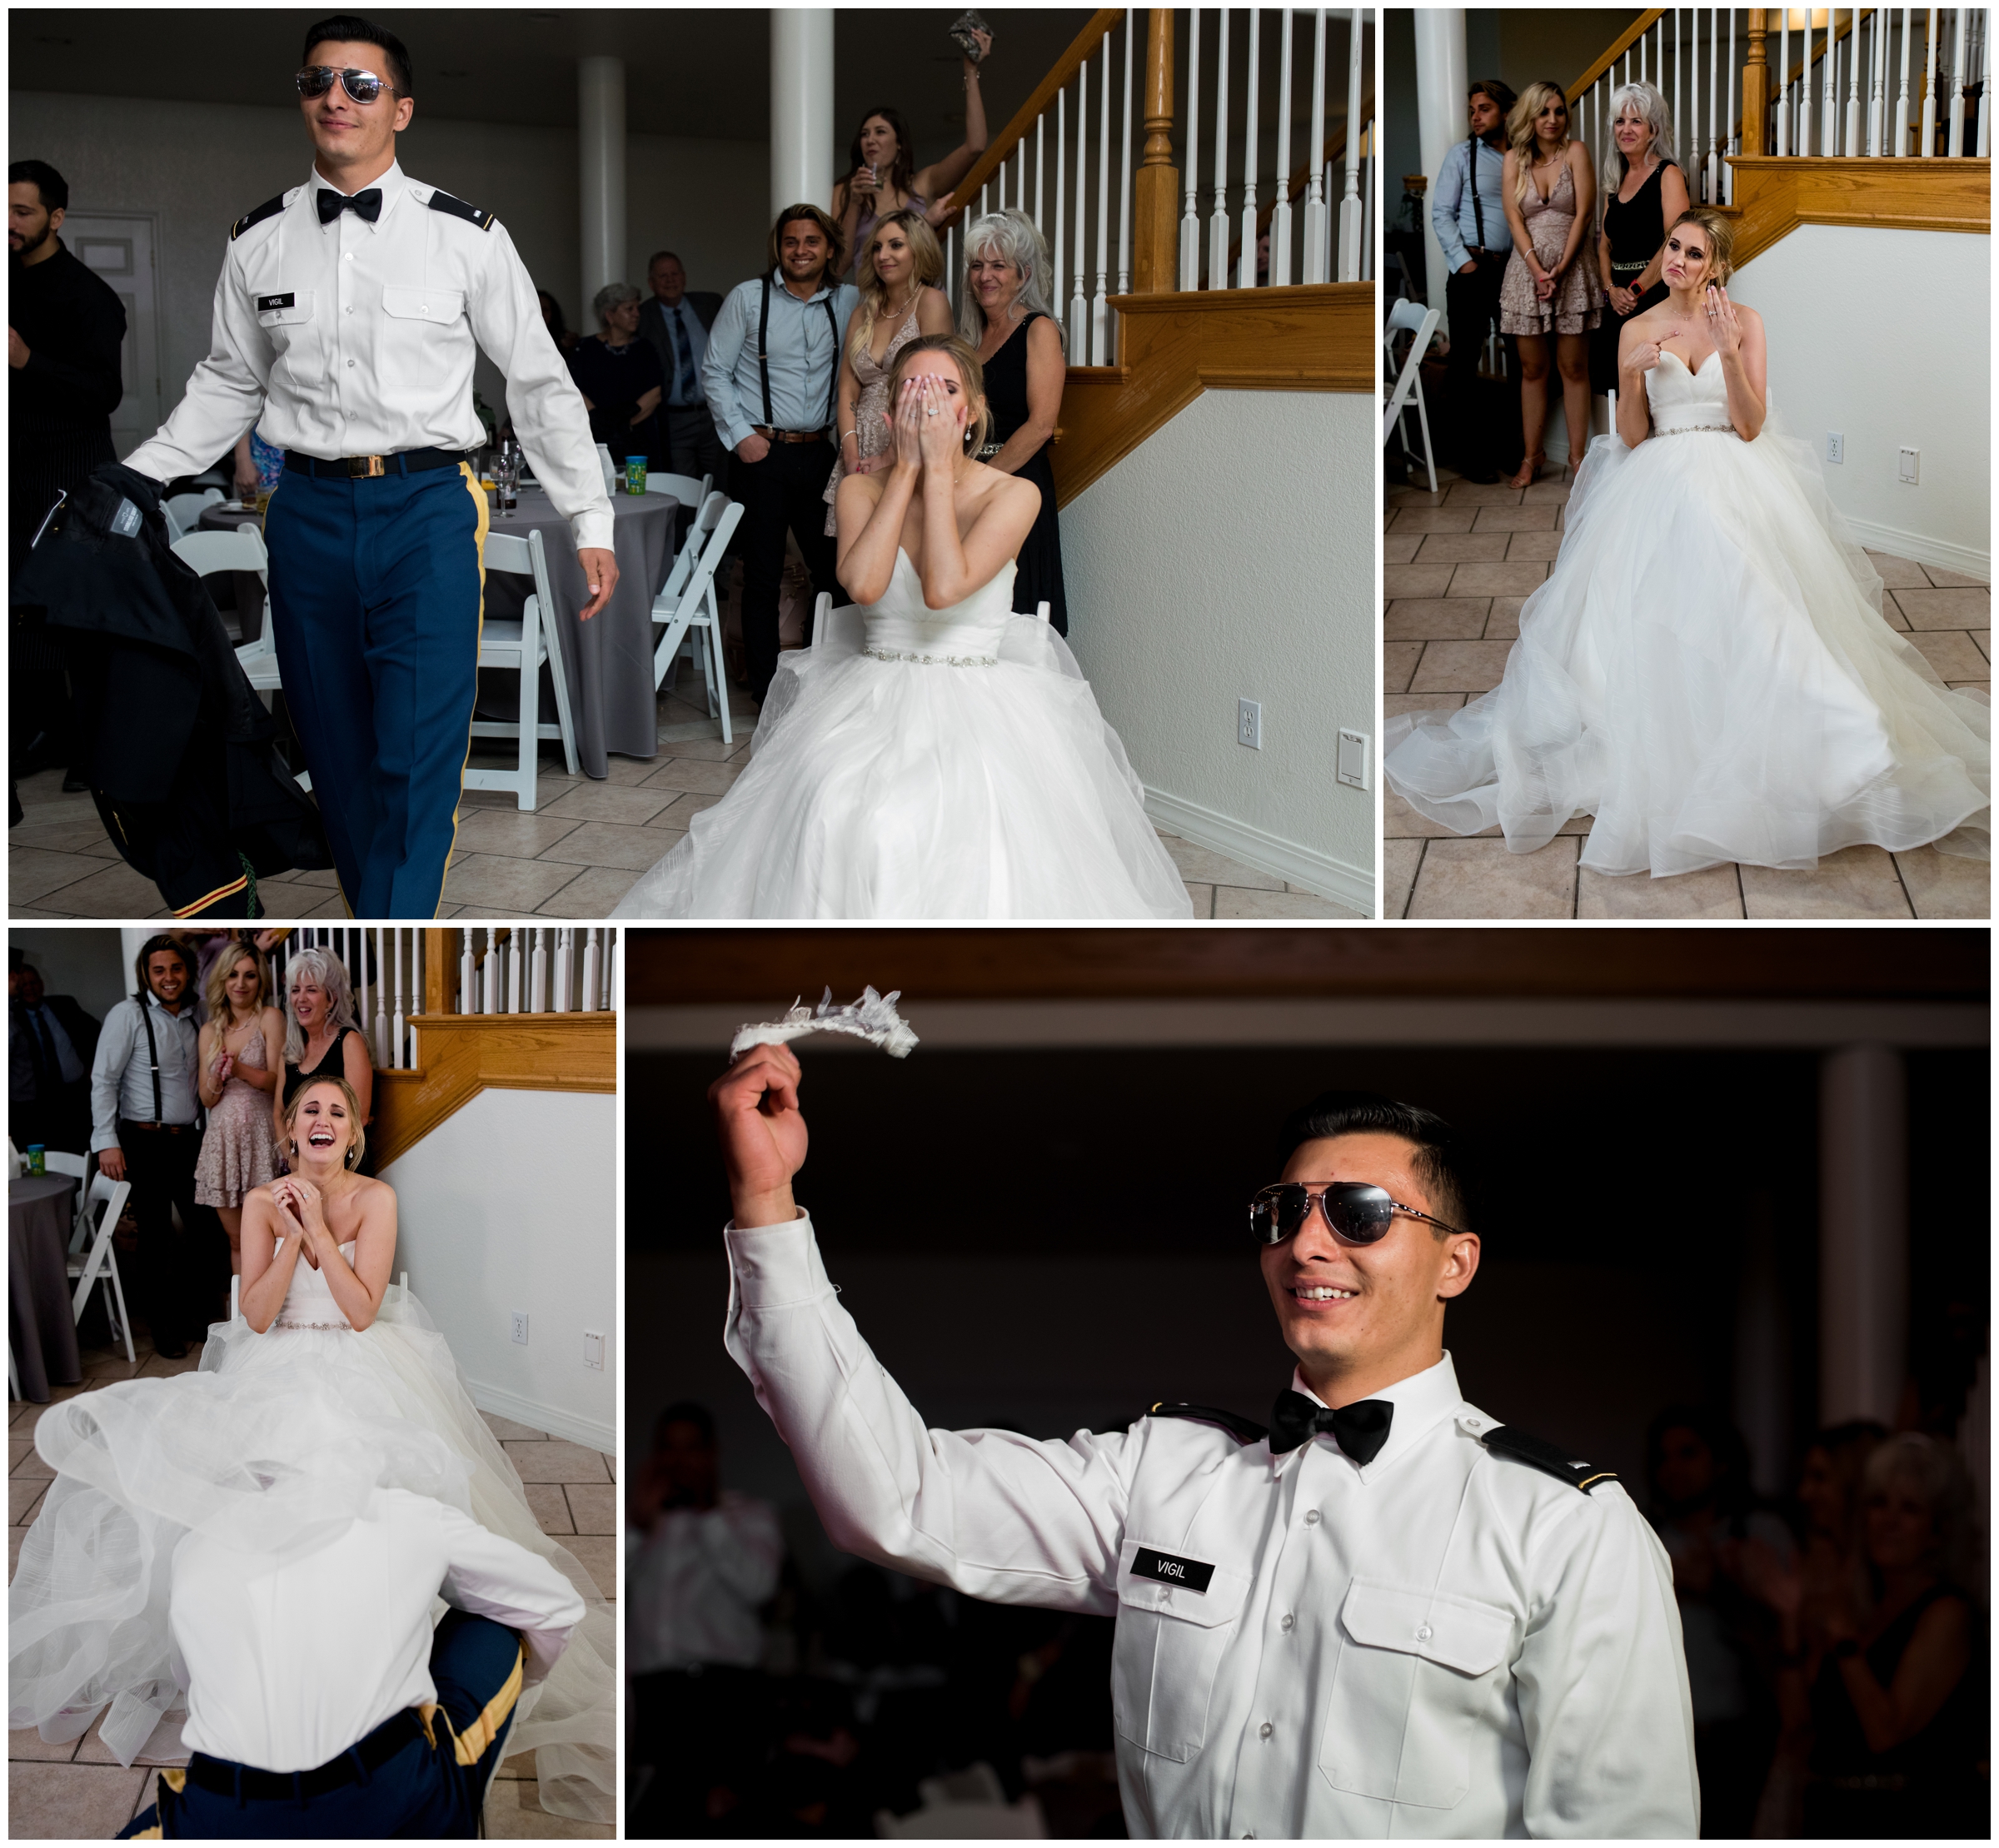 garter toss at Colorado summer wedding reception 